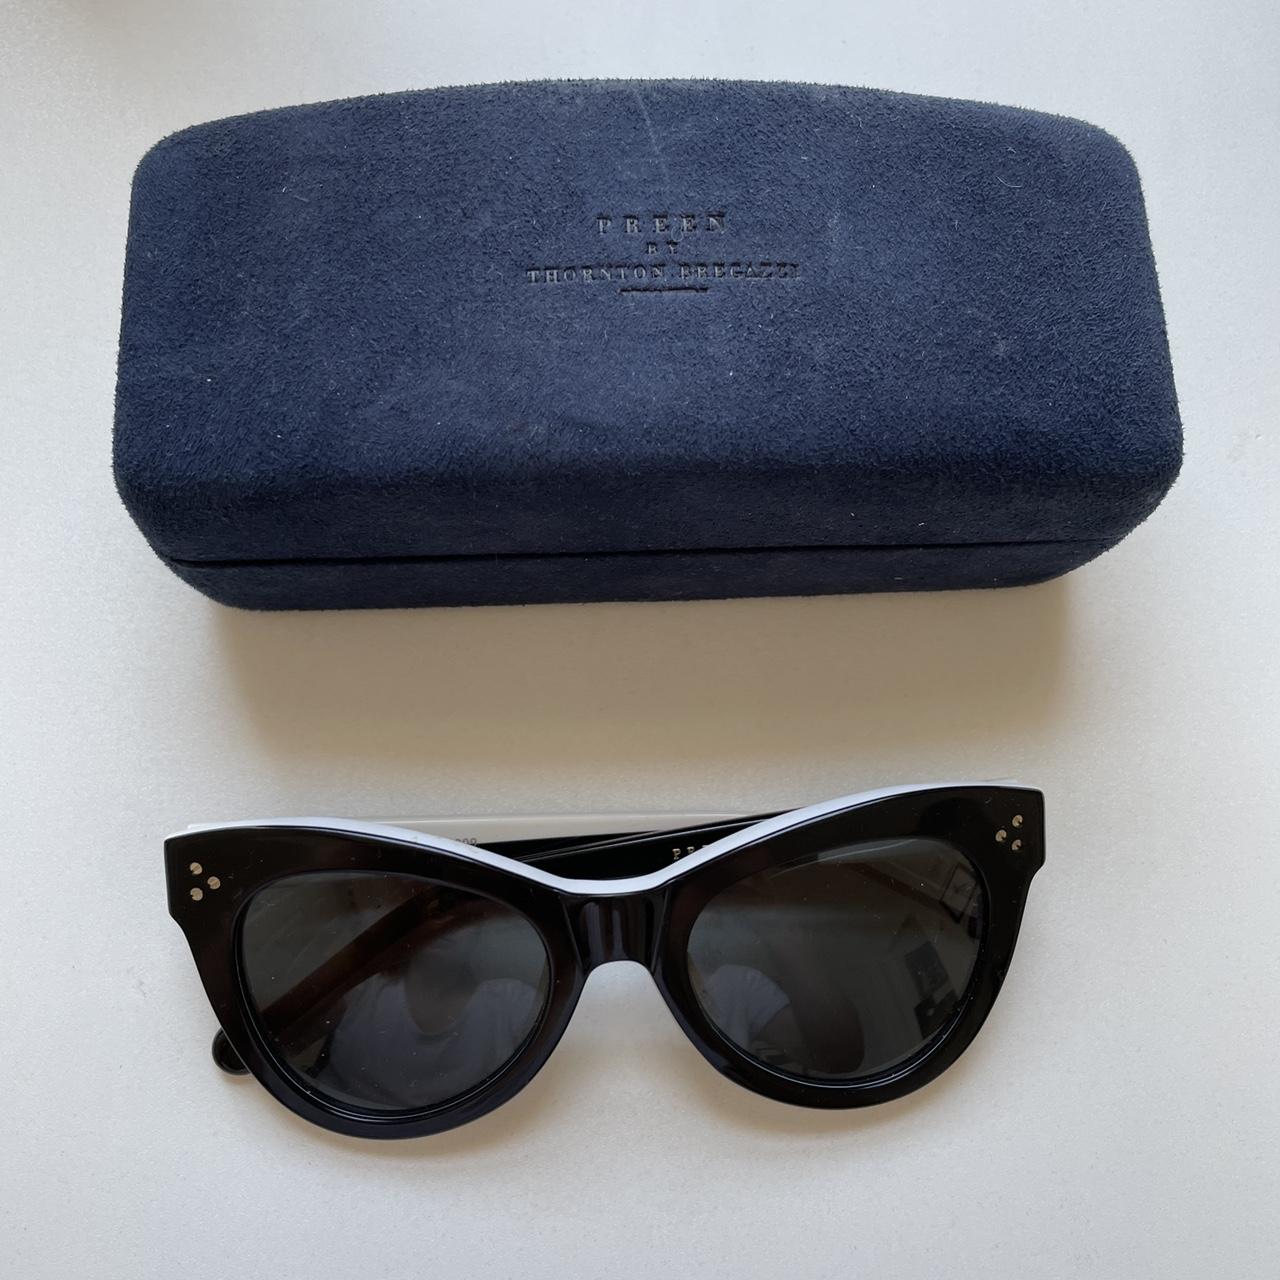 Preen Women's Black and White Sunglasses